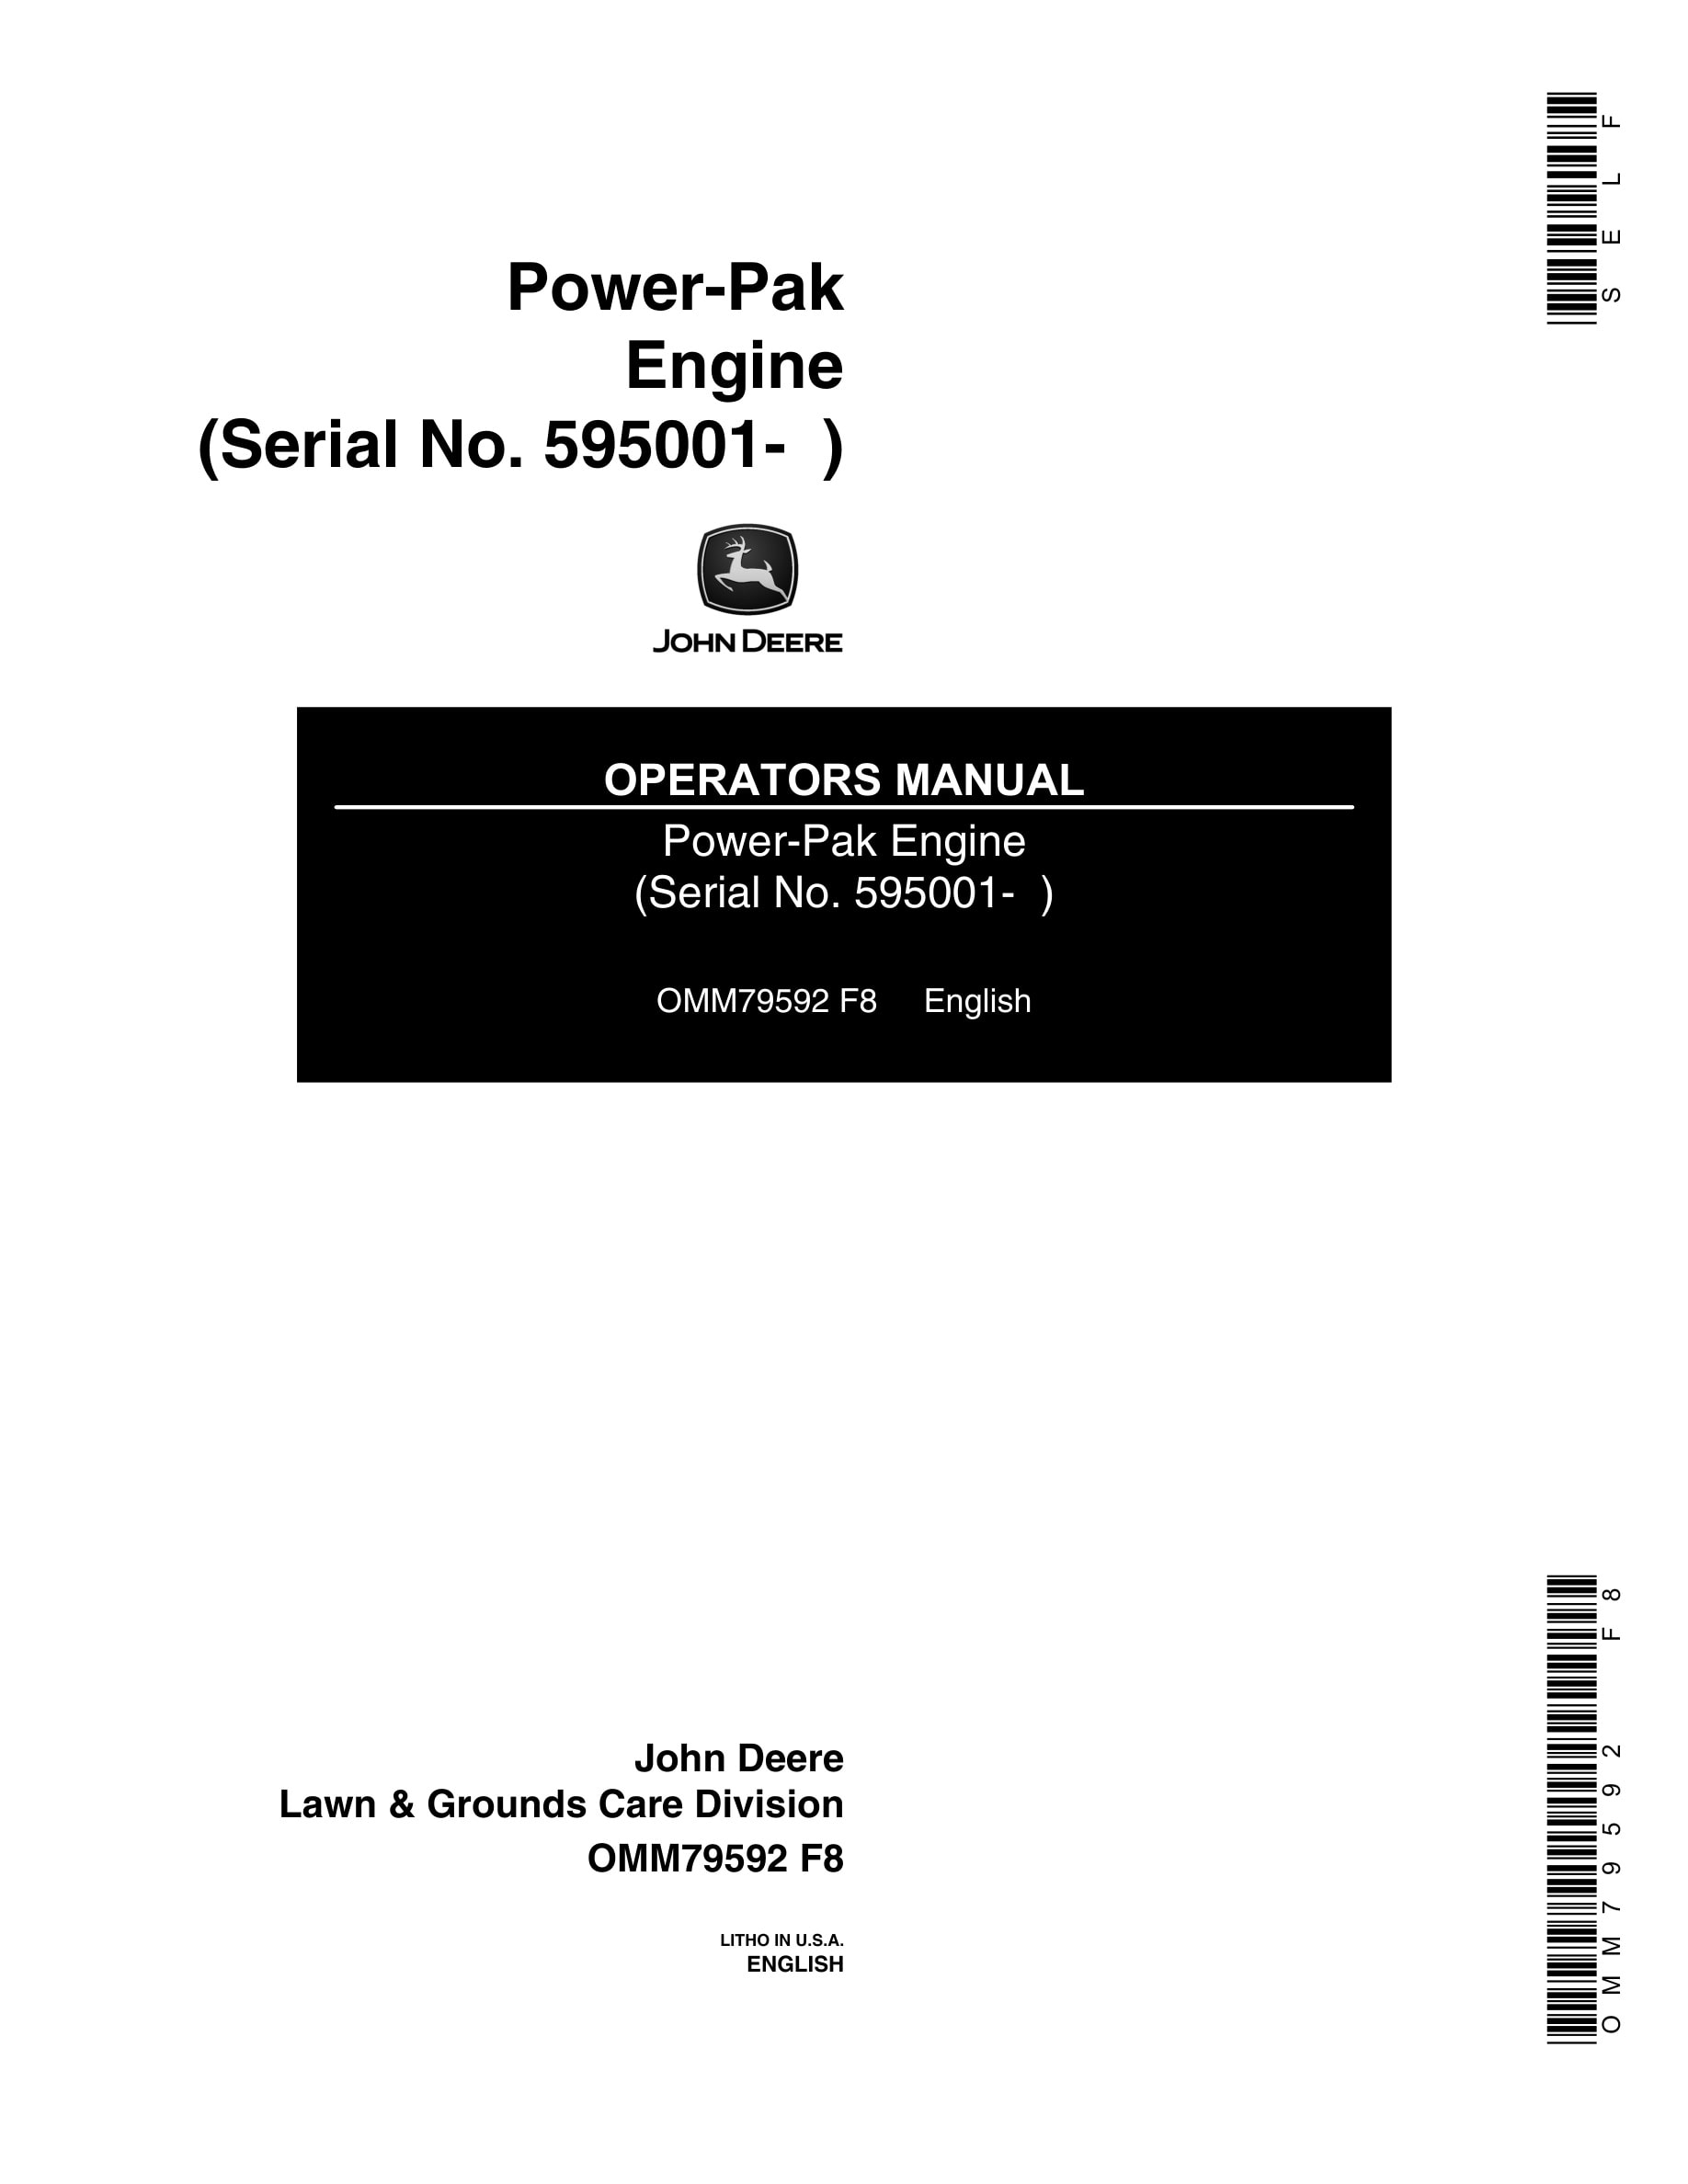 John Deere PowerTech Power-Pak Engine Operator Manual OMM79592-1